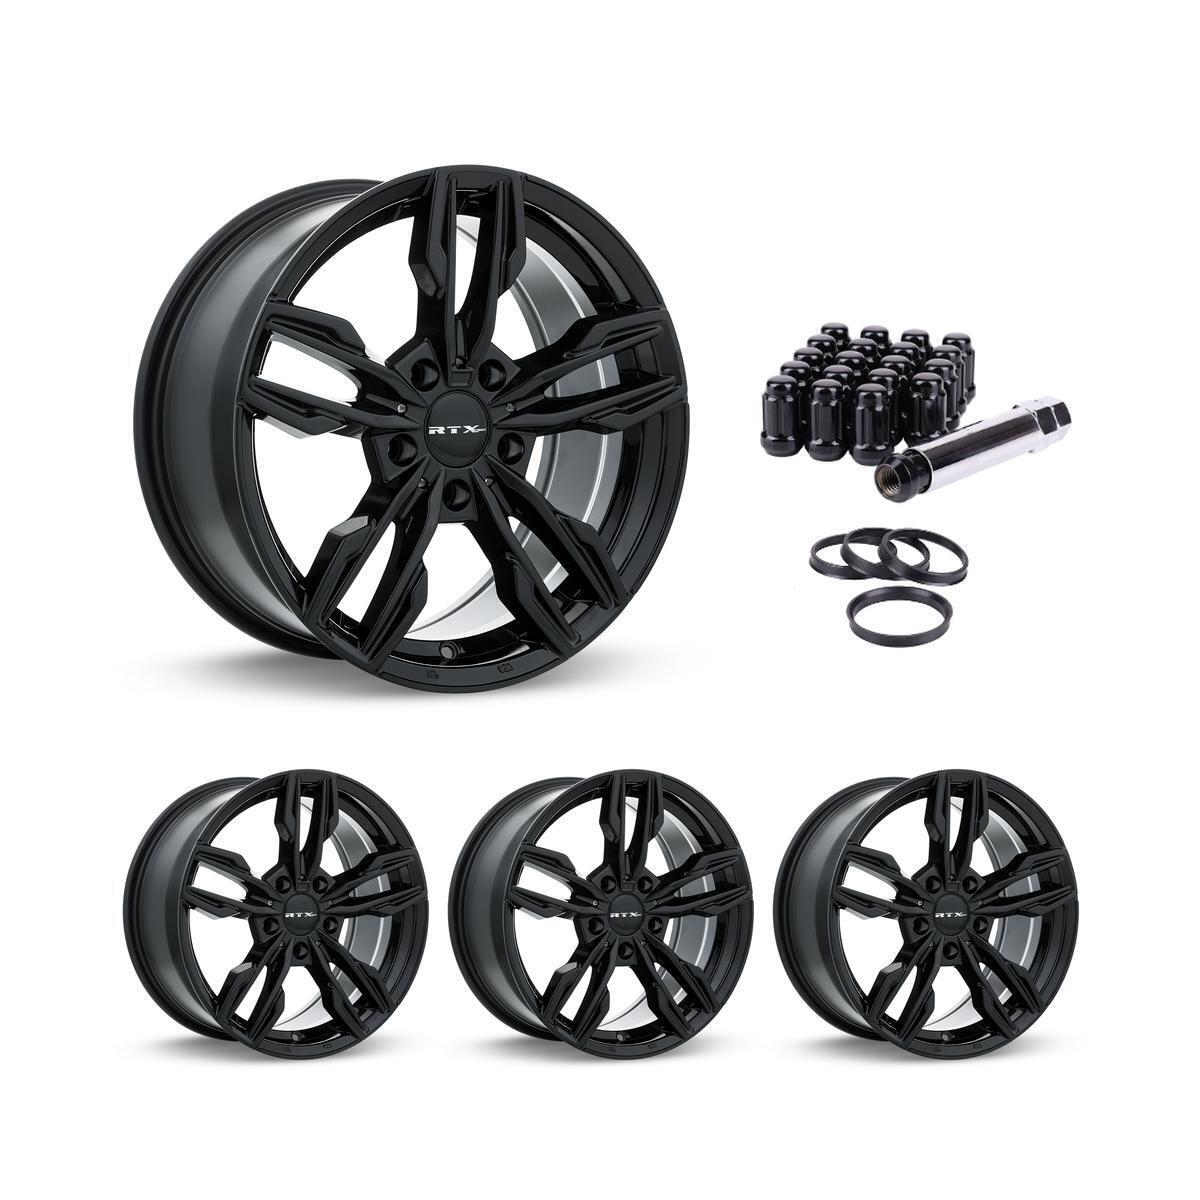 Wheel Rims Set with Black Lug Nuts Kit for 97-99 BMW 318i P862081 18 inch